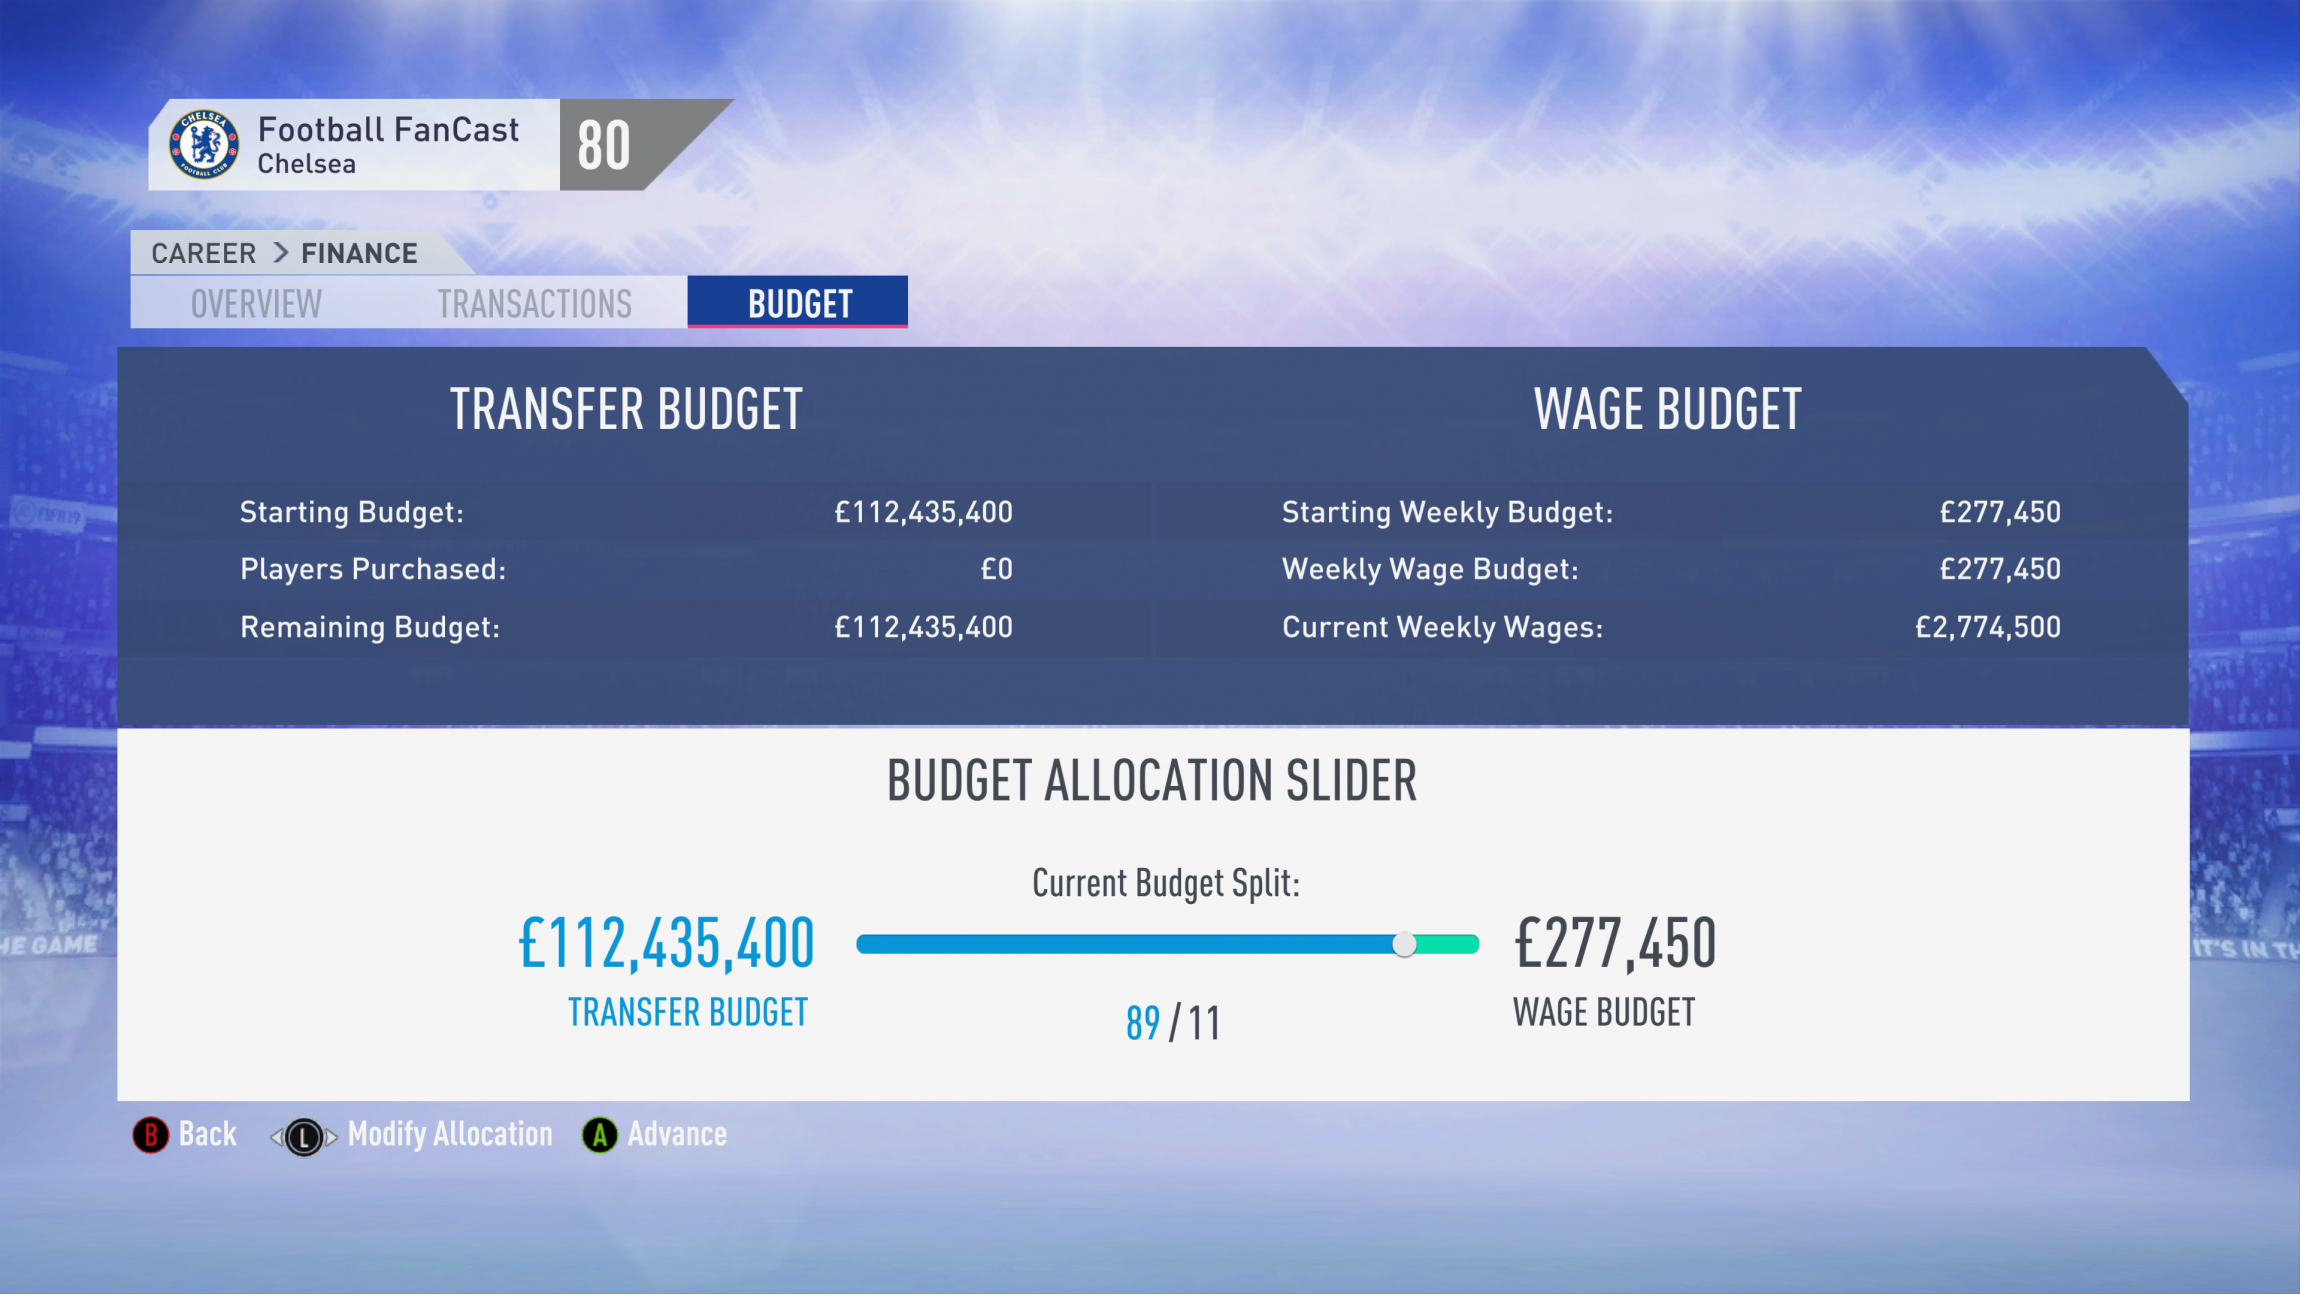 FIFA 19 - Chelsea Career Mode - Budget